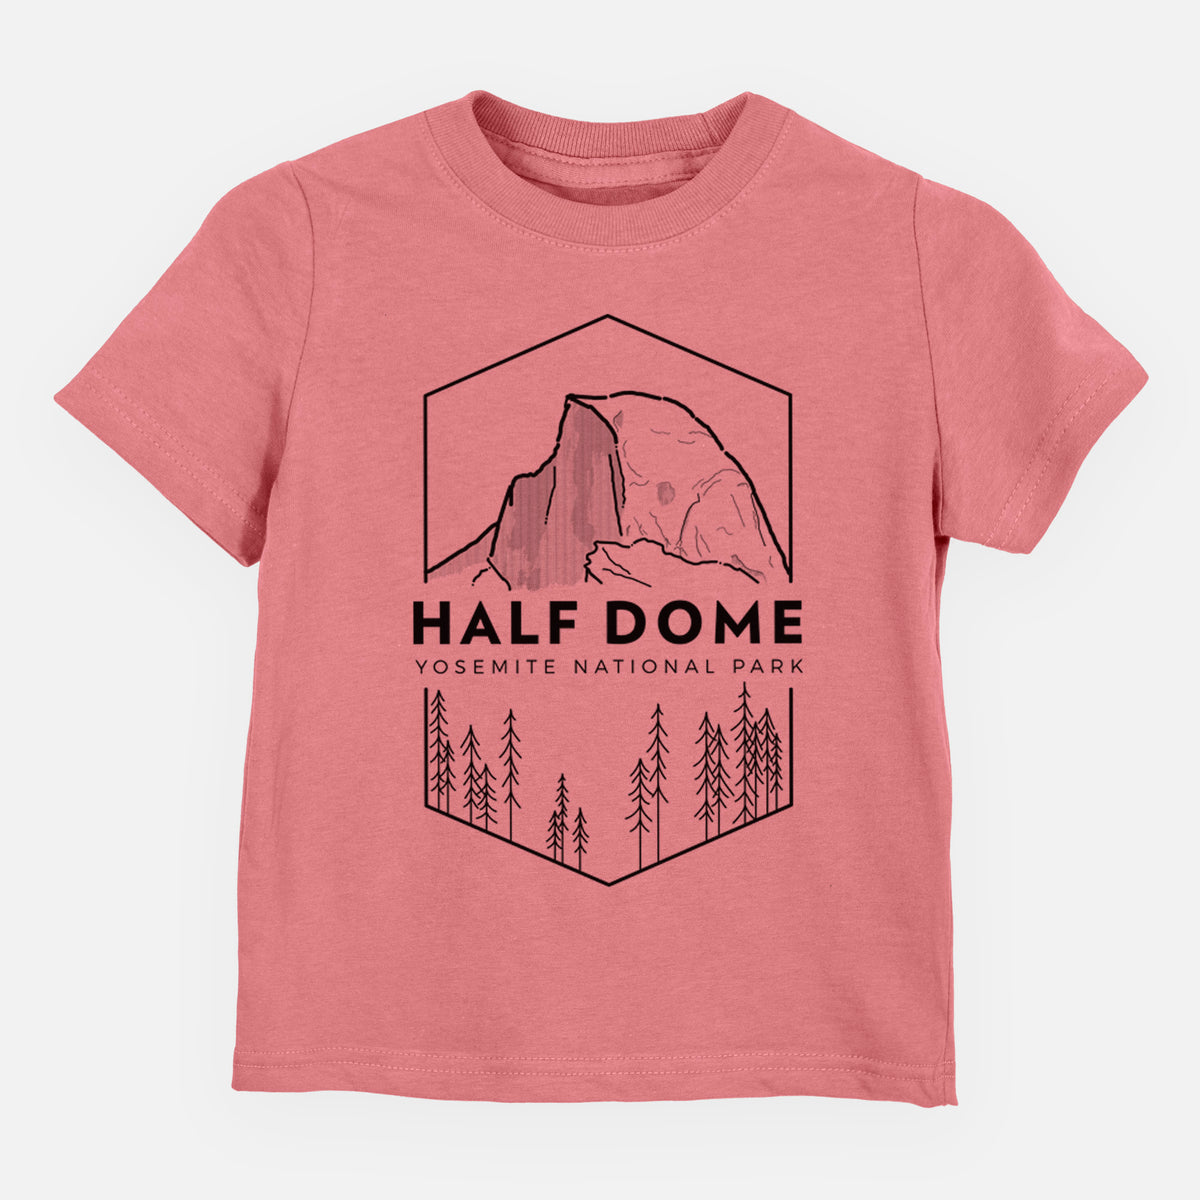 Half Dome - Yosemite National Park - Kids Shirt